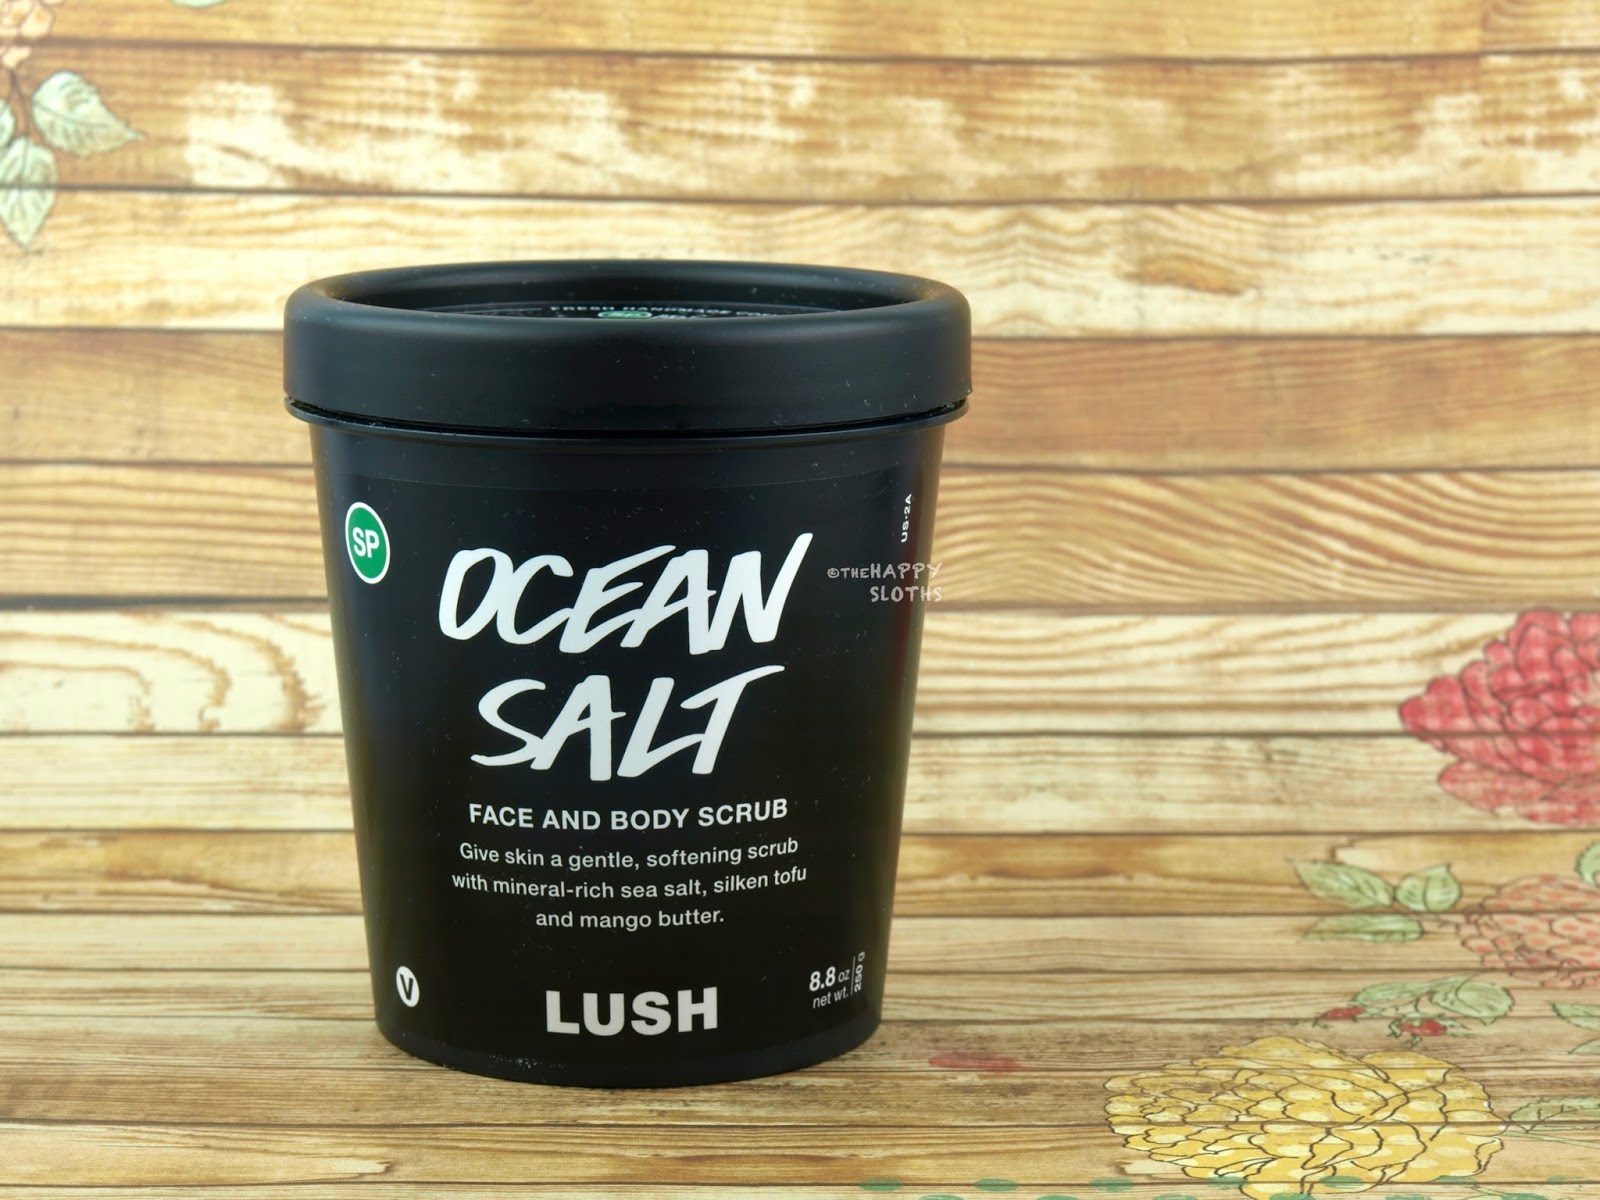 Lush "Self-Preserving" Ocean Salt Face and Body Scrub: Review